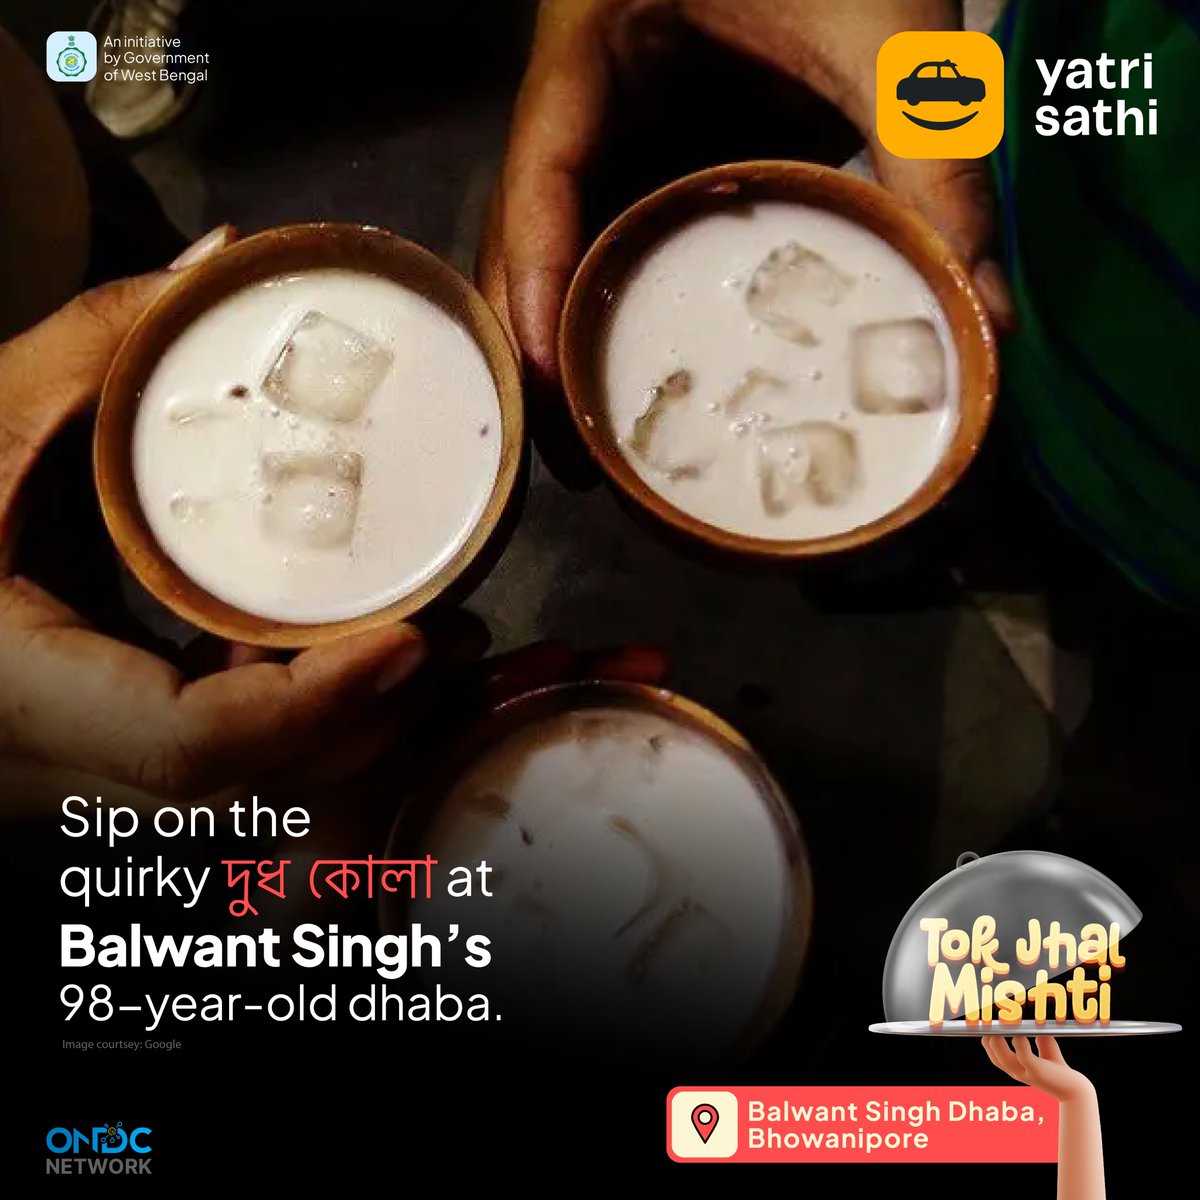 Need a mid-day cooler? 🥛How about sipping on Kolkata’s quirkiest drink - Doodh Cola at Balwant Singh Dhaba on S.P. Mukherjee Road? 😋
যাওয়া যাক! 🚖

#Foodie #Food #KolkataFood #YatriSathi #AmarShohorAmarSofor #FoodTrails #KolkataDiaries